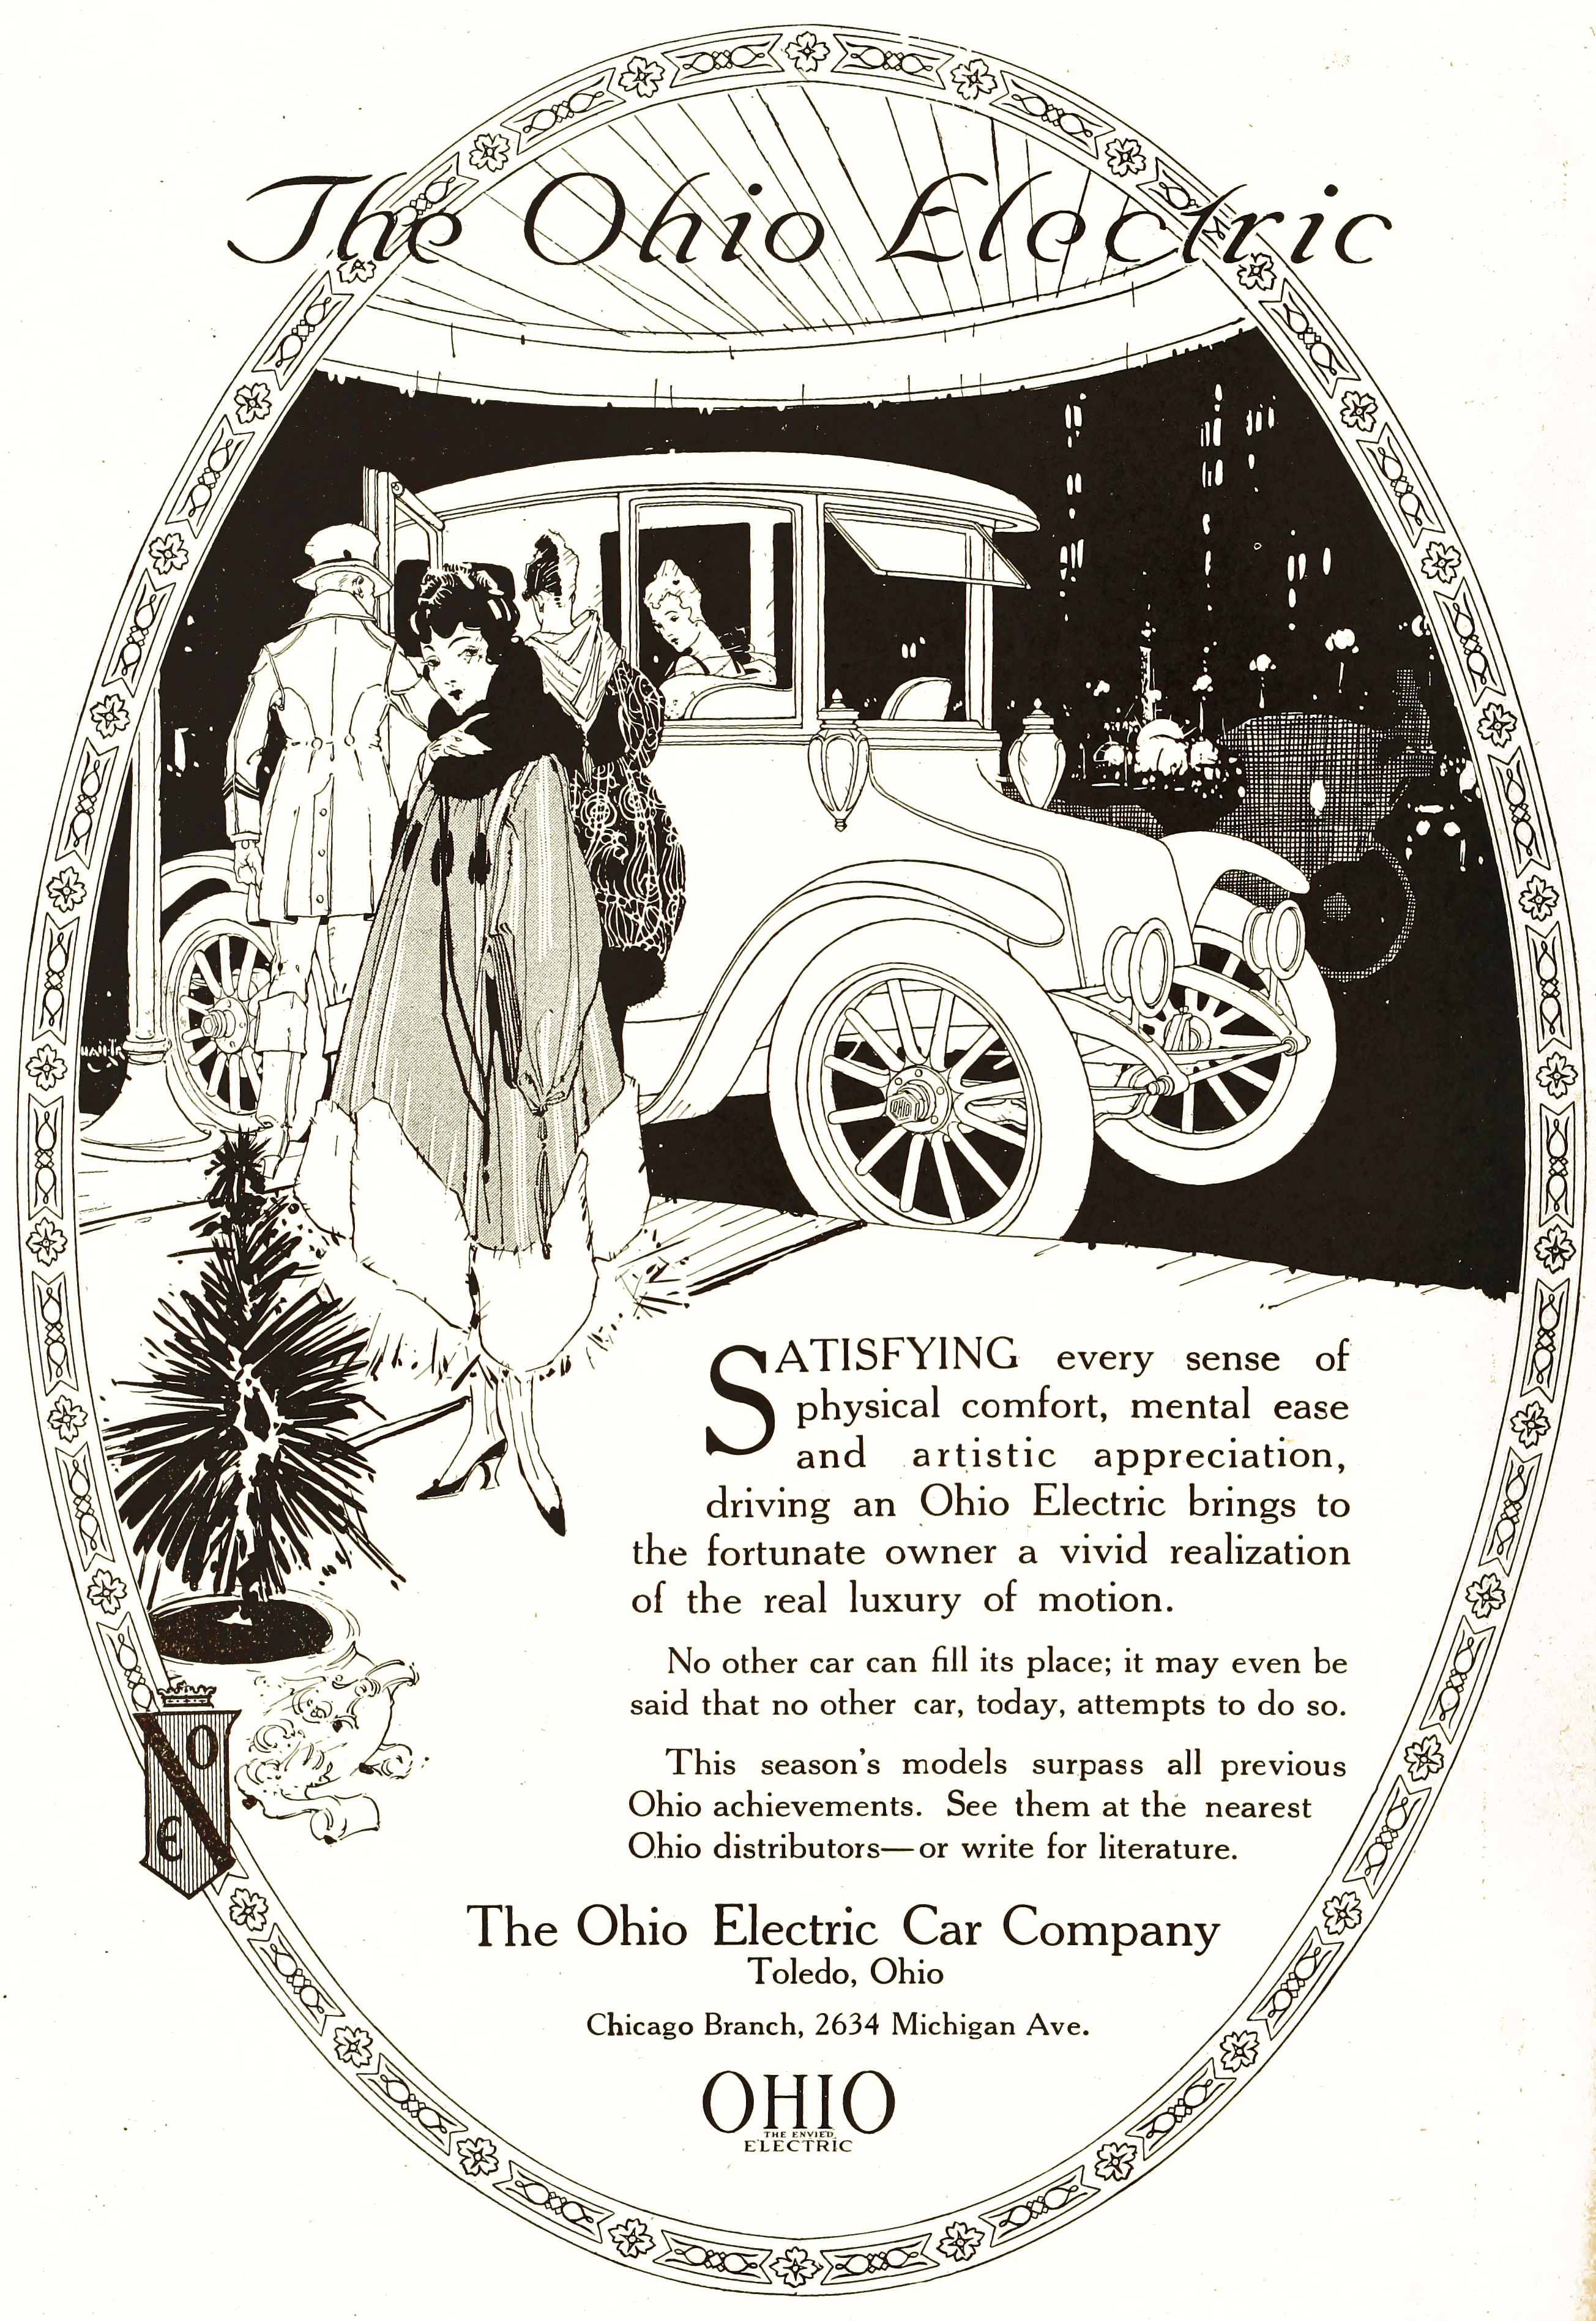 The Ohio Electric Car Co Ad circa 1917